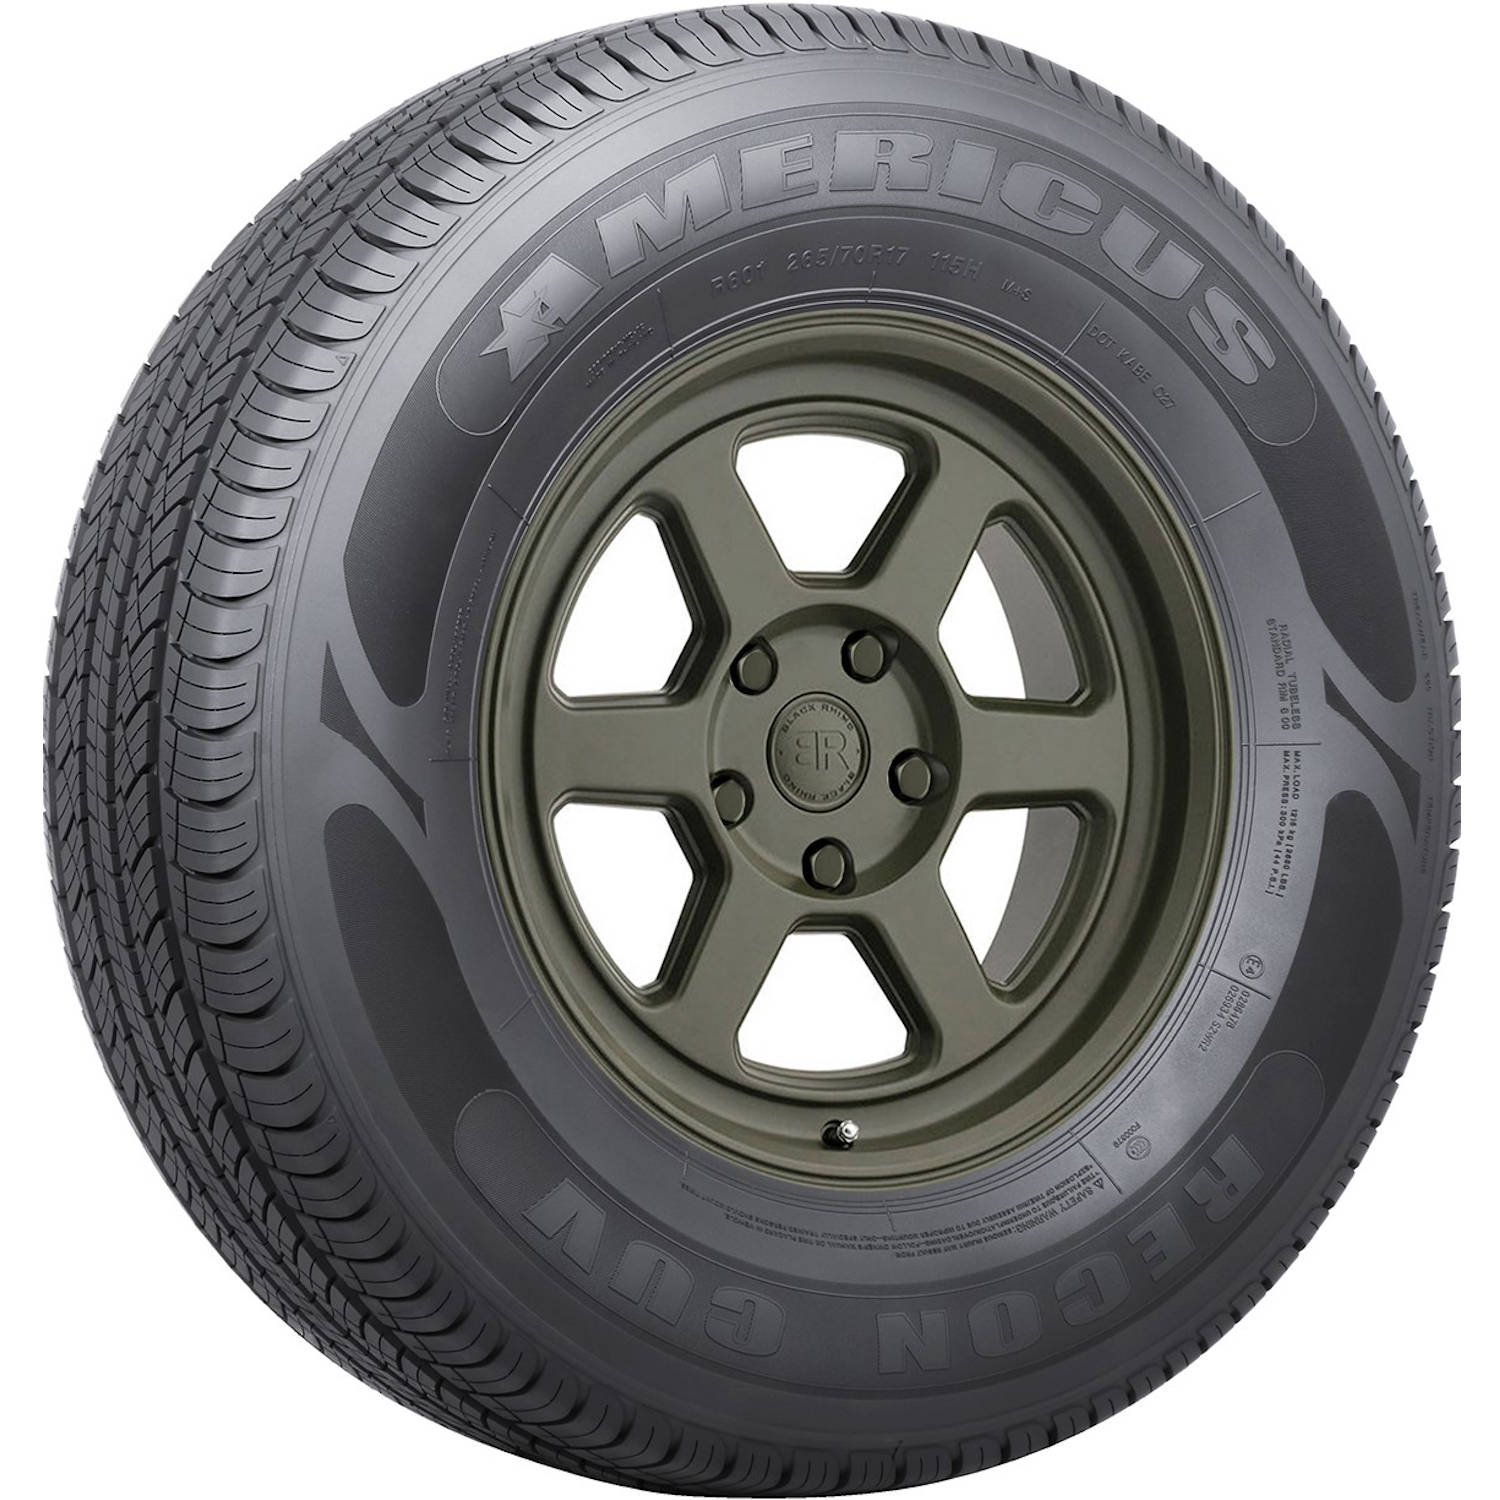 AMERICUS RECON CUV 225/70R16 (28.4X8.9R 16) Tires